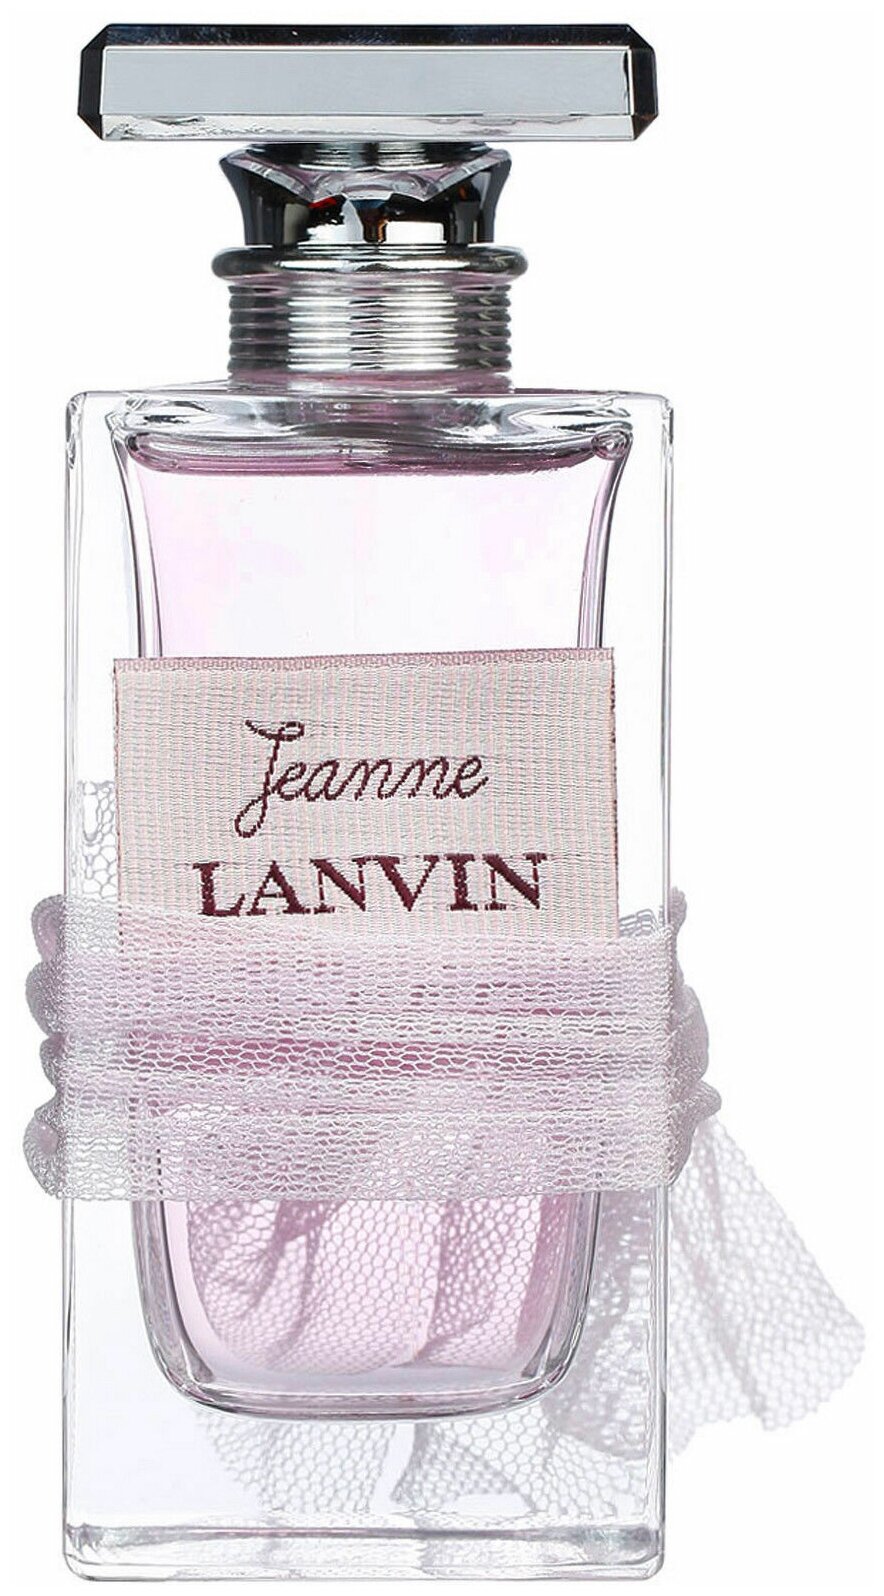 Lanvin парфюмерная вода Jeanne Lanvin — купить по выгодной цене на Яндекс  Маркете